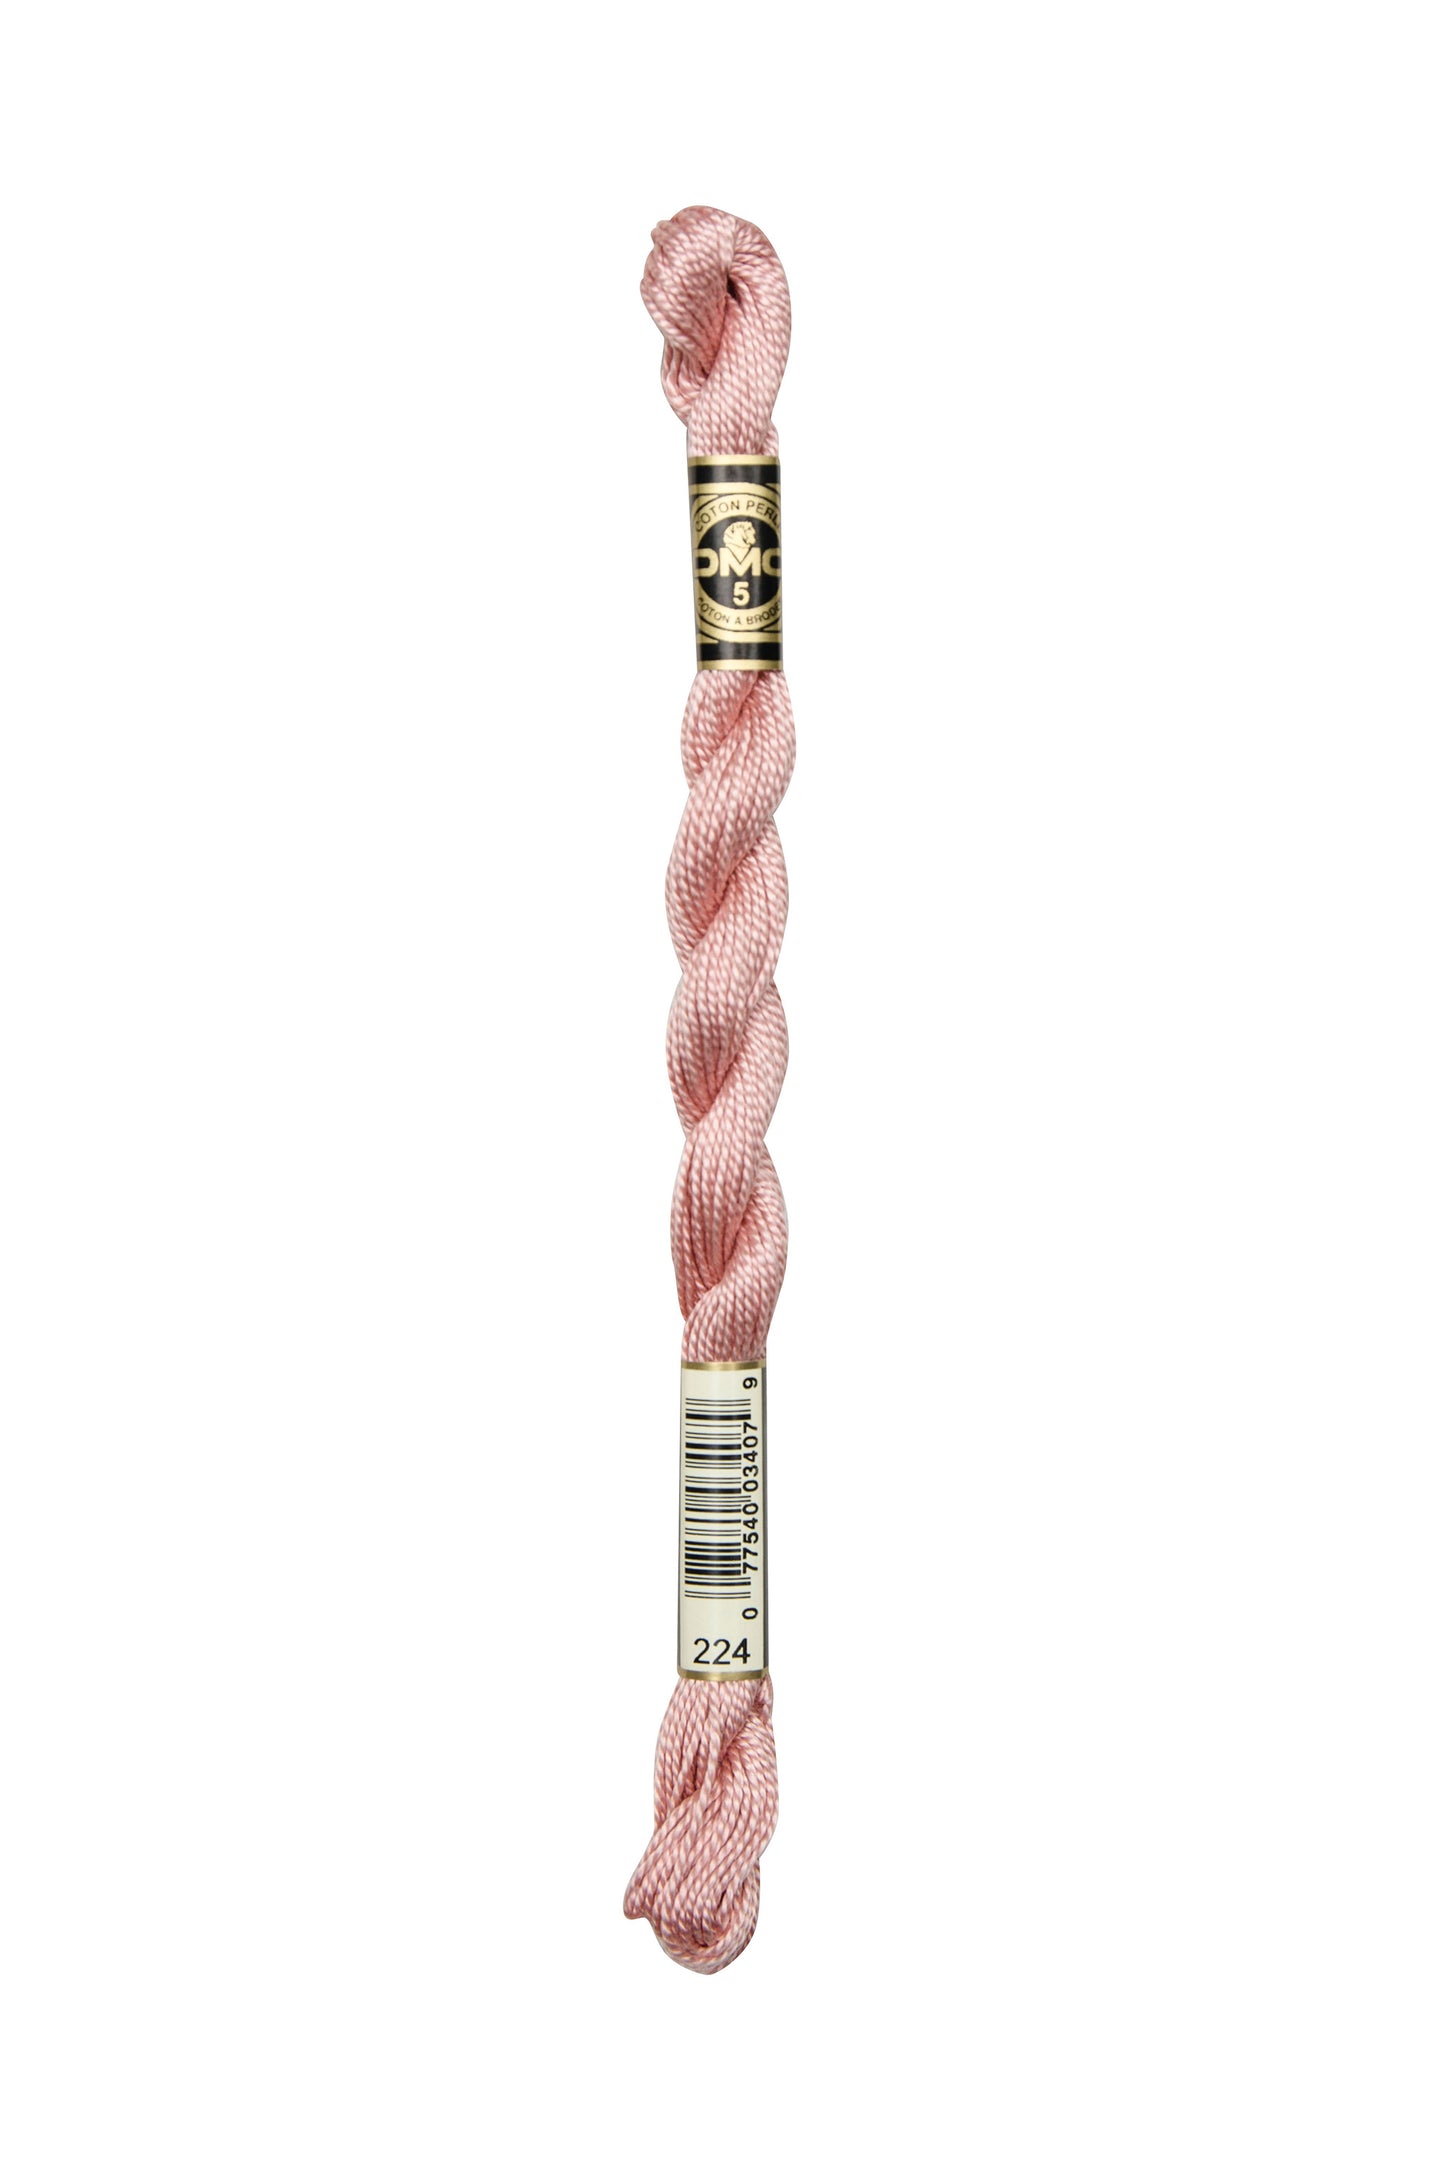 224 Very Light Shell Pink – DMC #5 Perle Cotton Skein